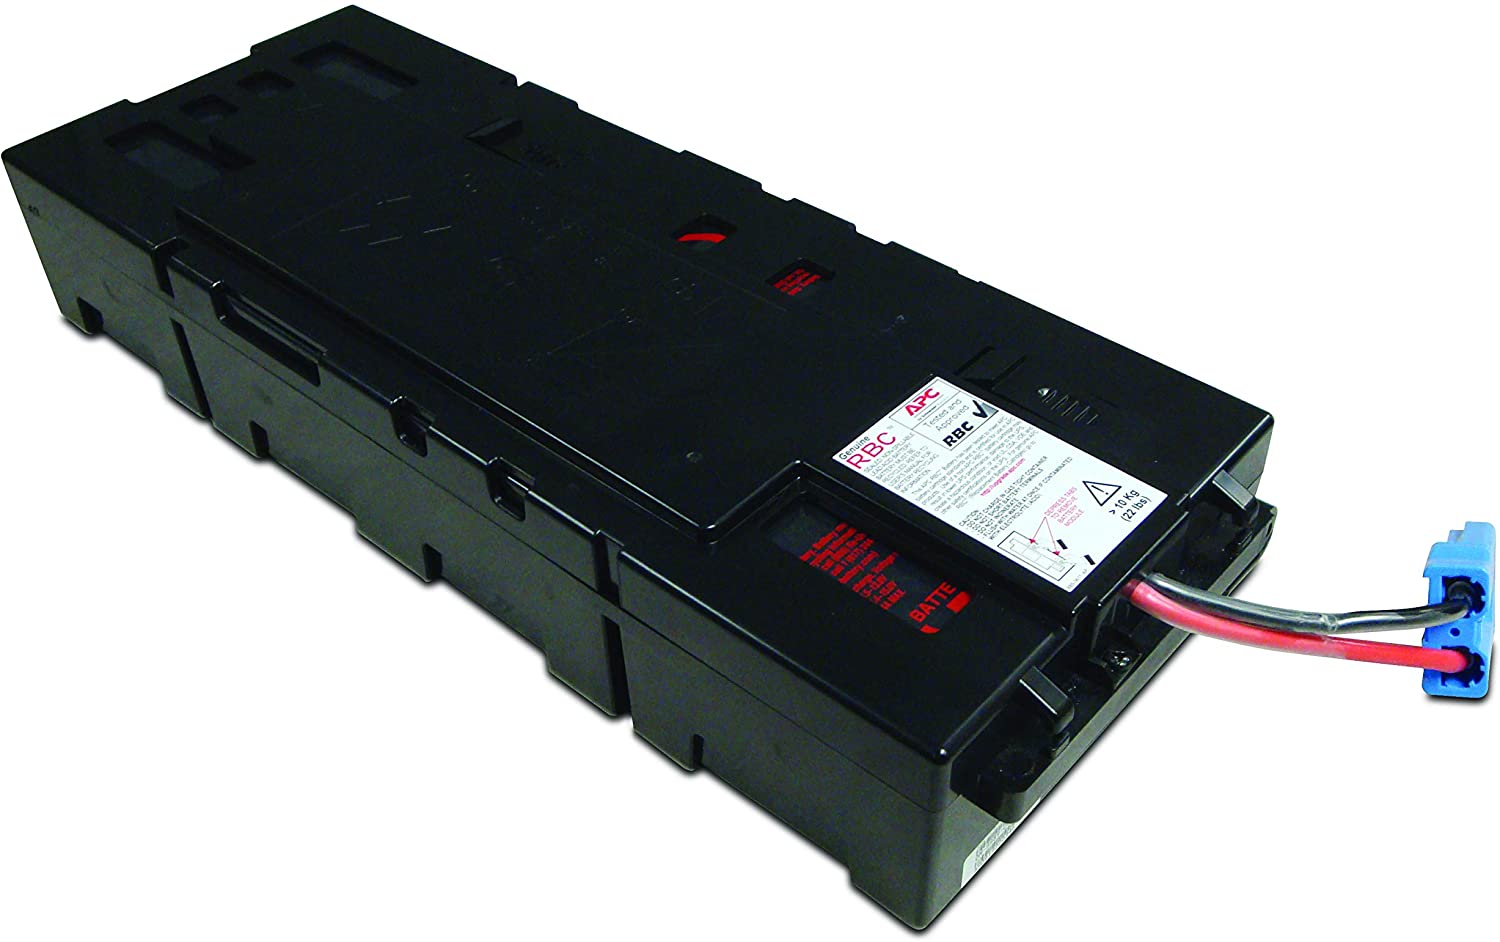 APC UPS Battery Replacement for APC Smart-UPS Model SMT1500, SMT1500C,  SMT1500US, SUA1500, SUA1500US and select others (RBC7) 